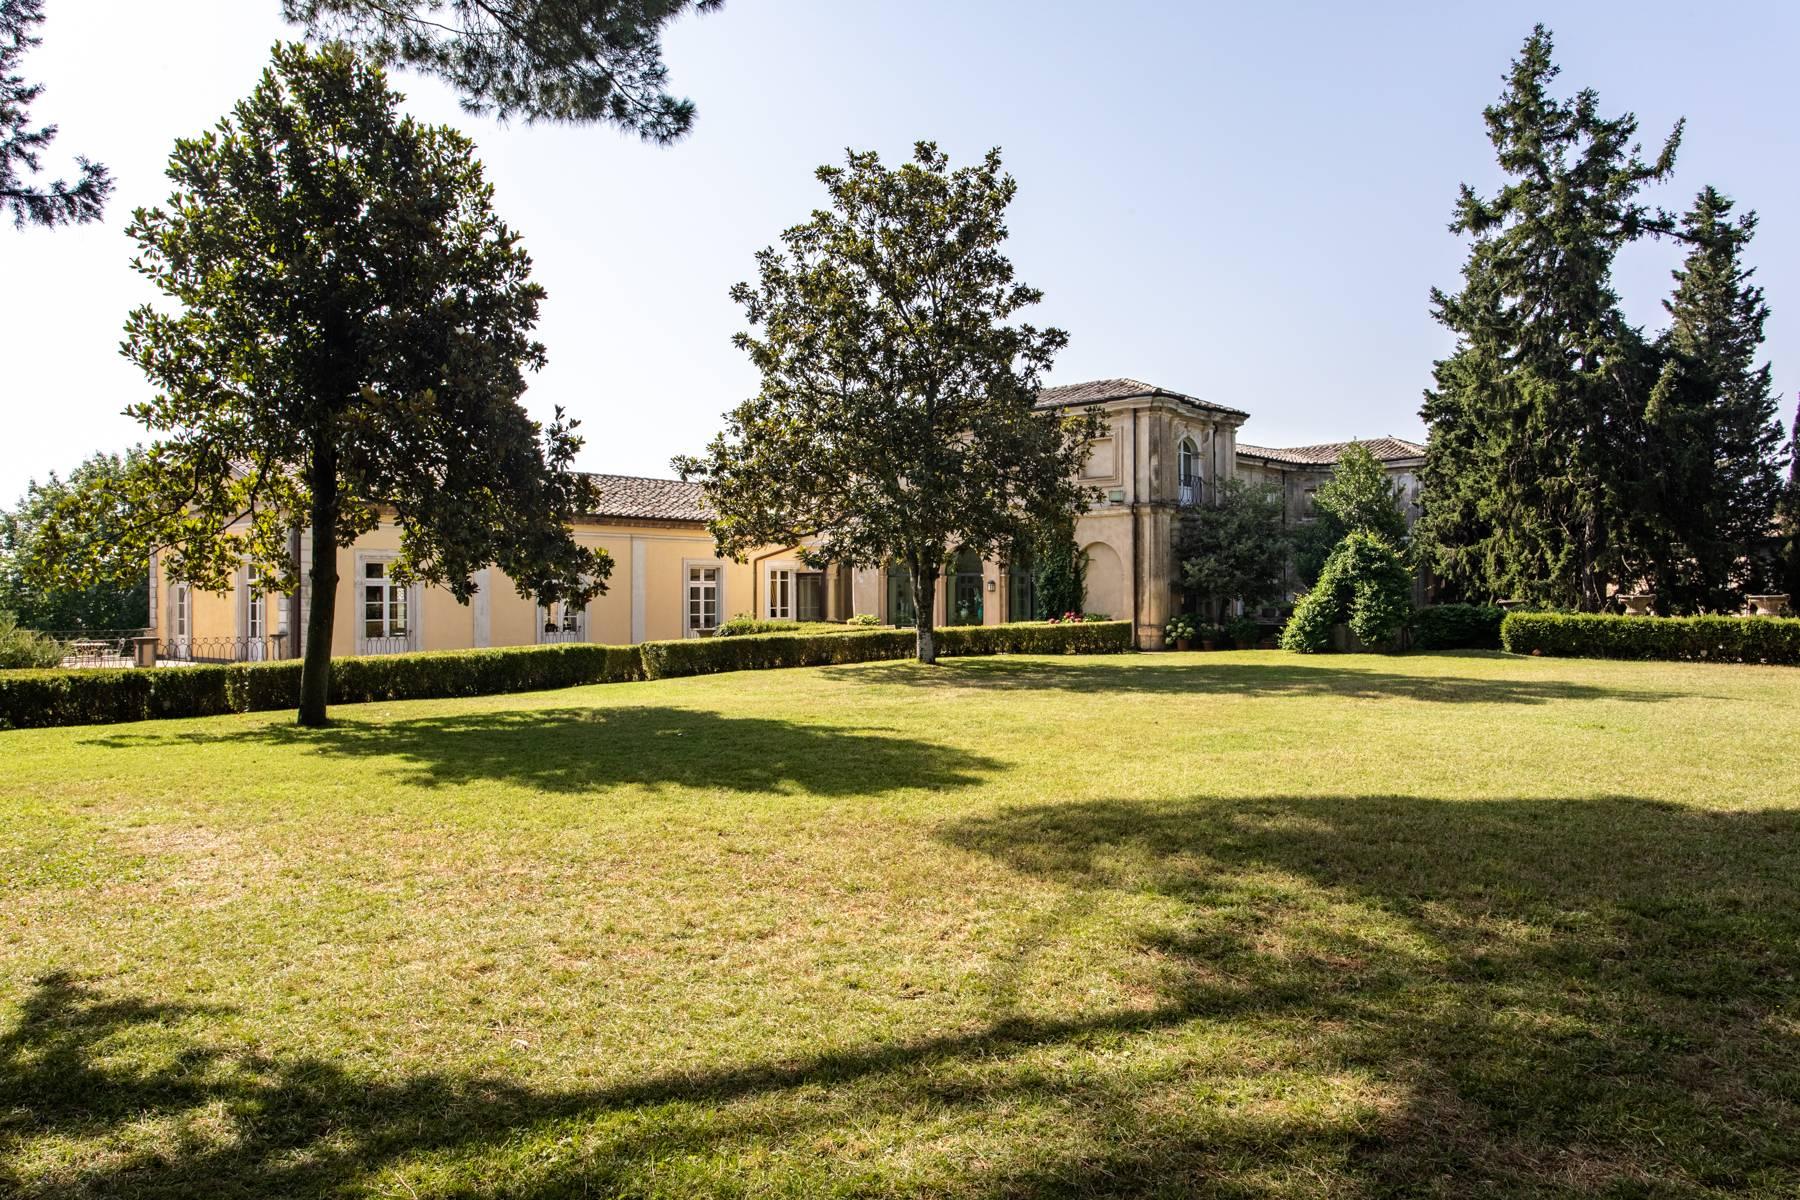 Lubriano, Orvieto - Elegant baroque palace overlooking Civita di Bagnoregio - 11